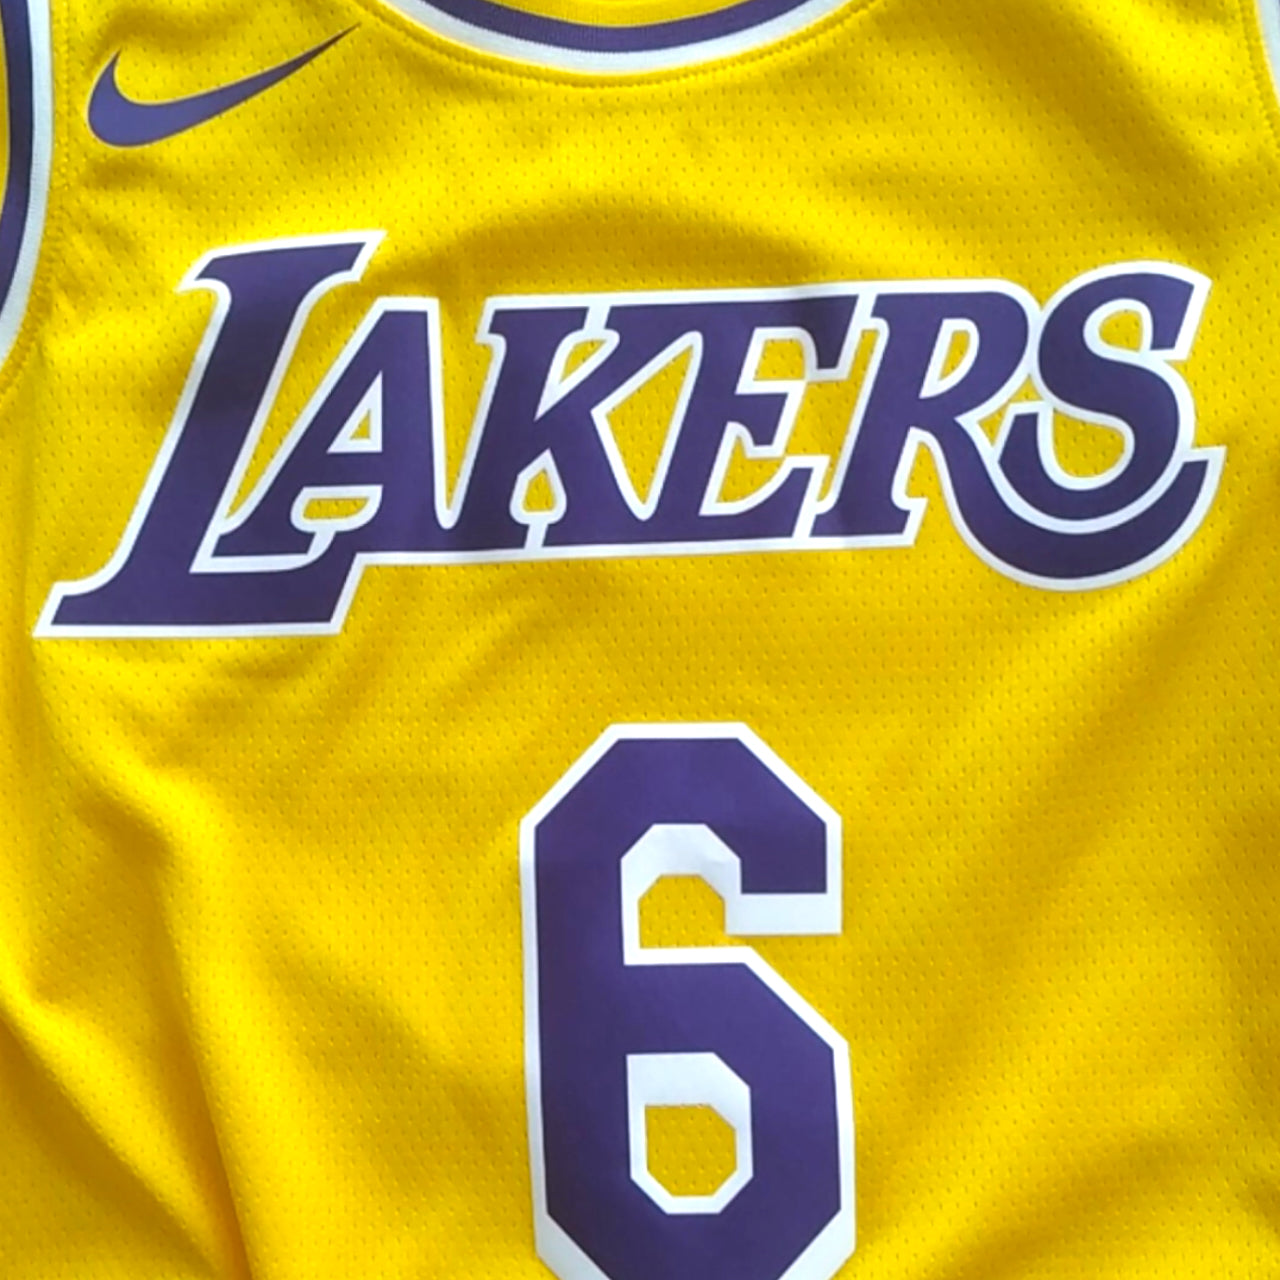 LeBron James Los Angeles Lakers Icon Edition Nike Swingman Jersey - Yellow #6 - Hoop Jersey Store